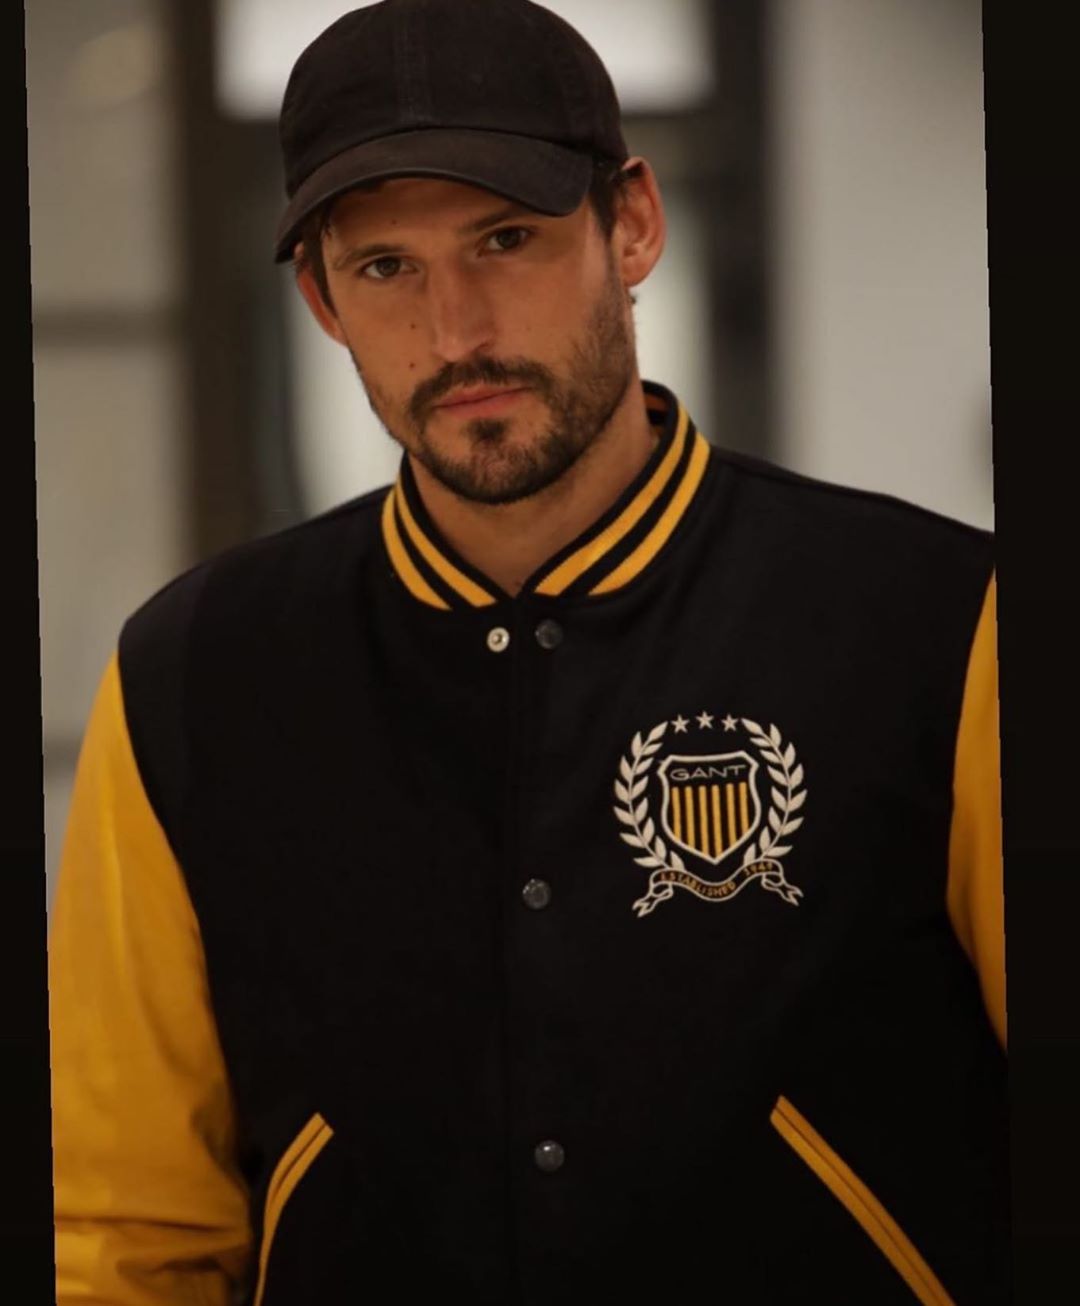 GANT - Университетская куртка GANT - классика американского спортивного стиля!
#gantrussia #gant #varsity #varsityjacket